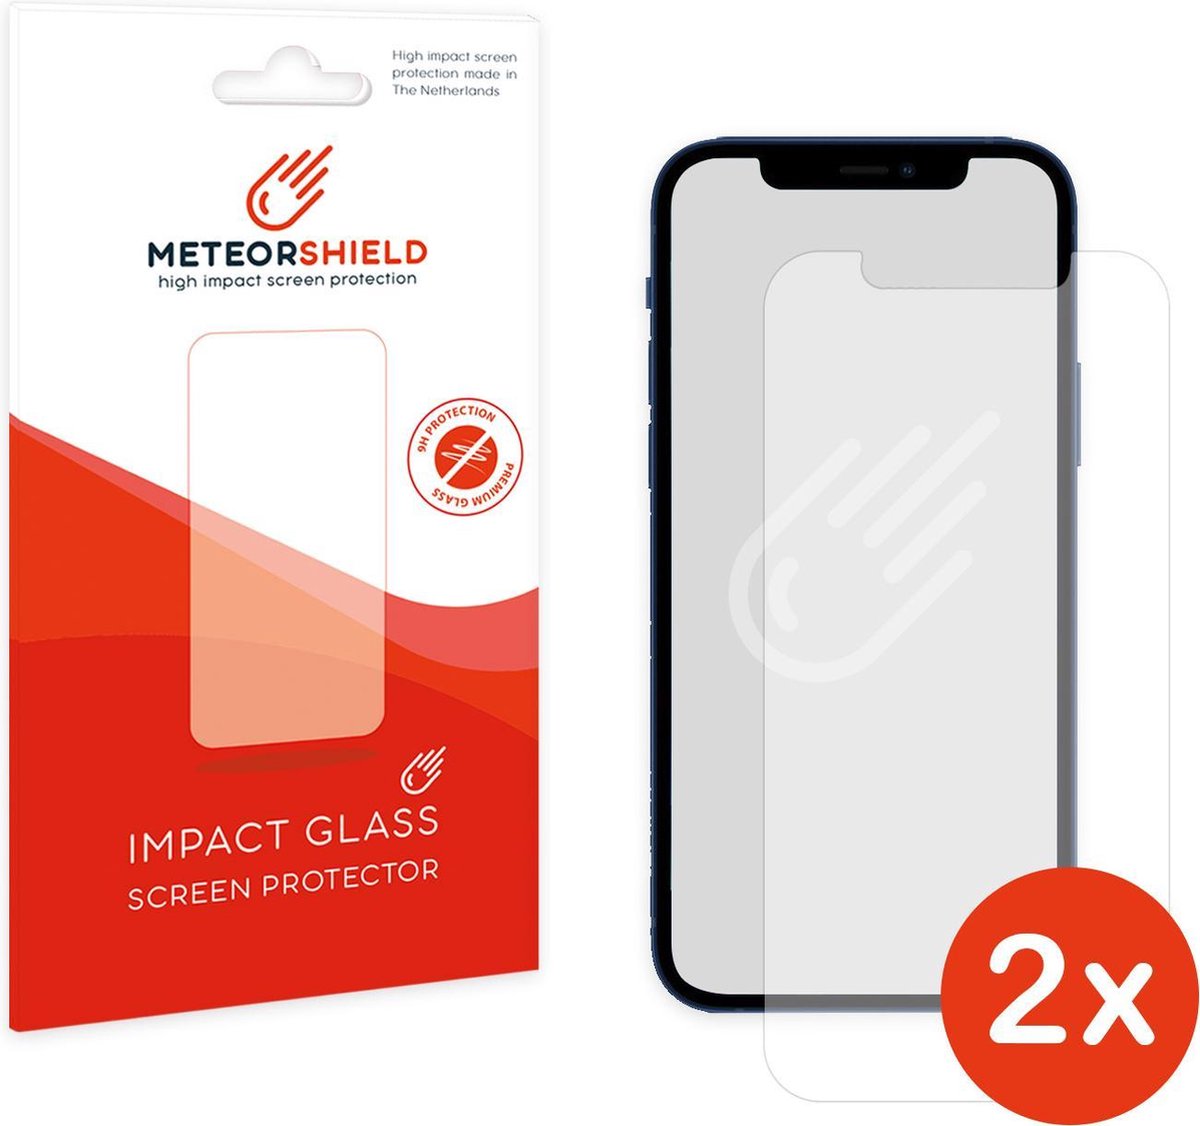 2 stuks: Meteorshield iPhone 12 Pro screenprotector - Ultra clear impact glass